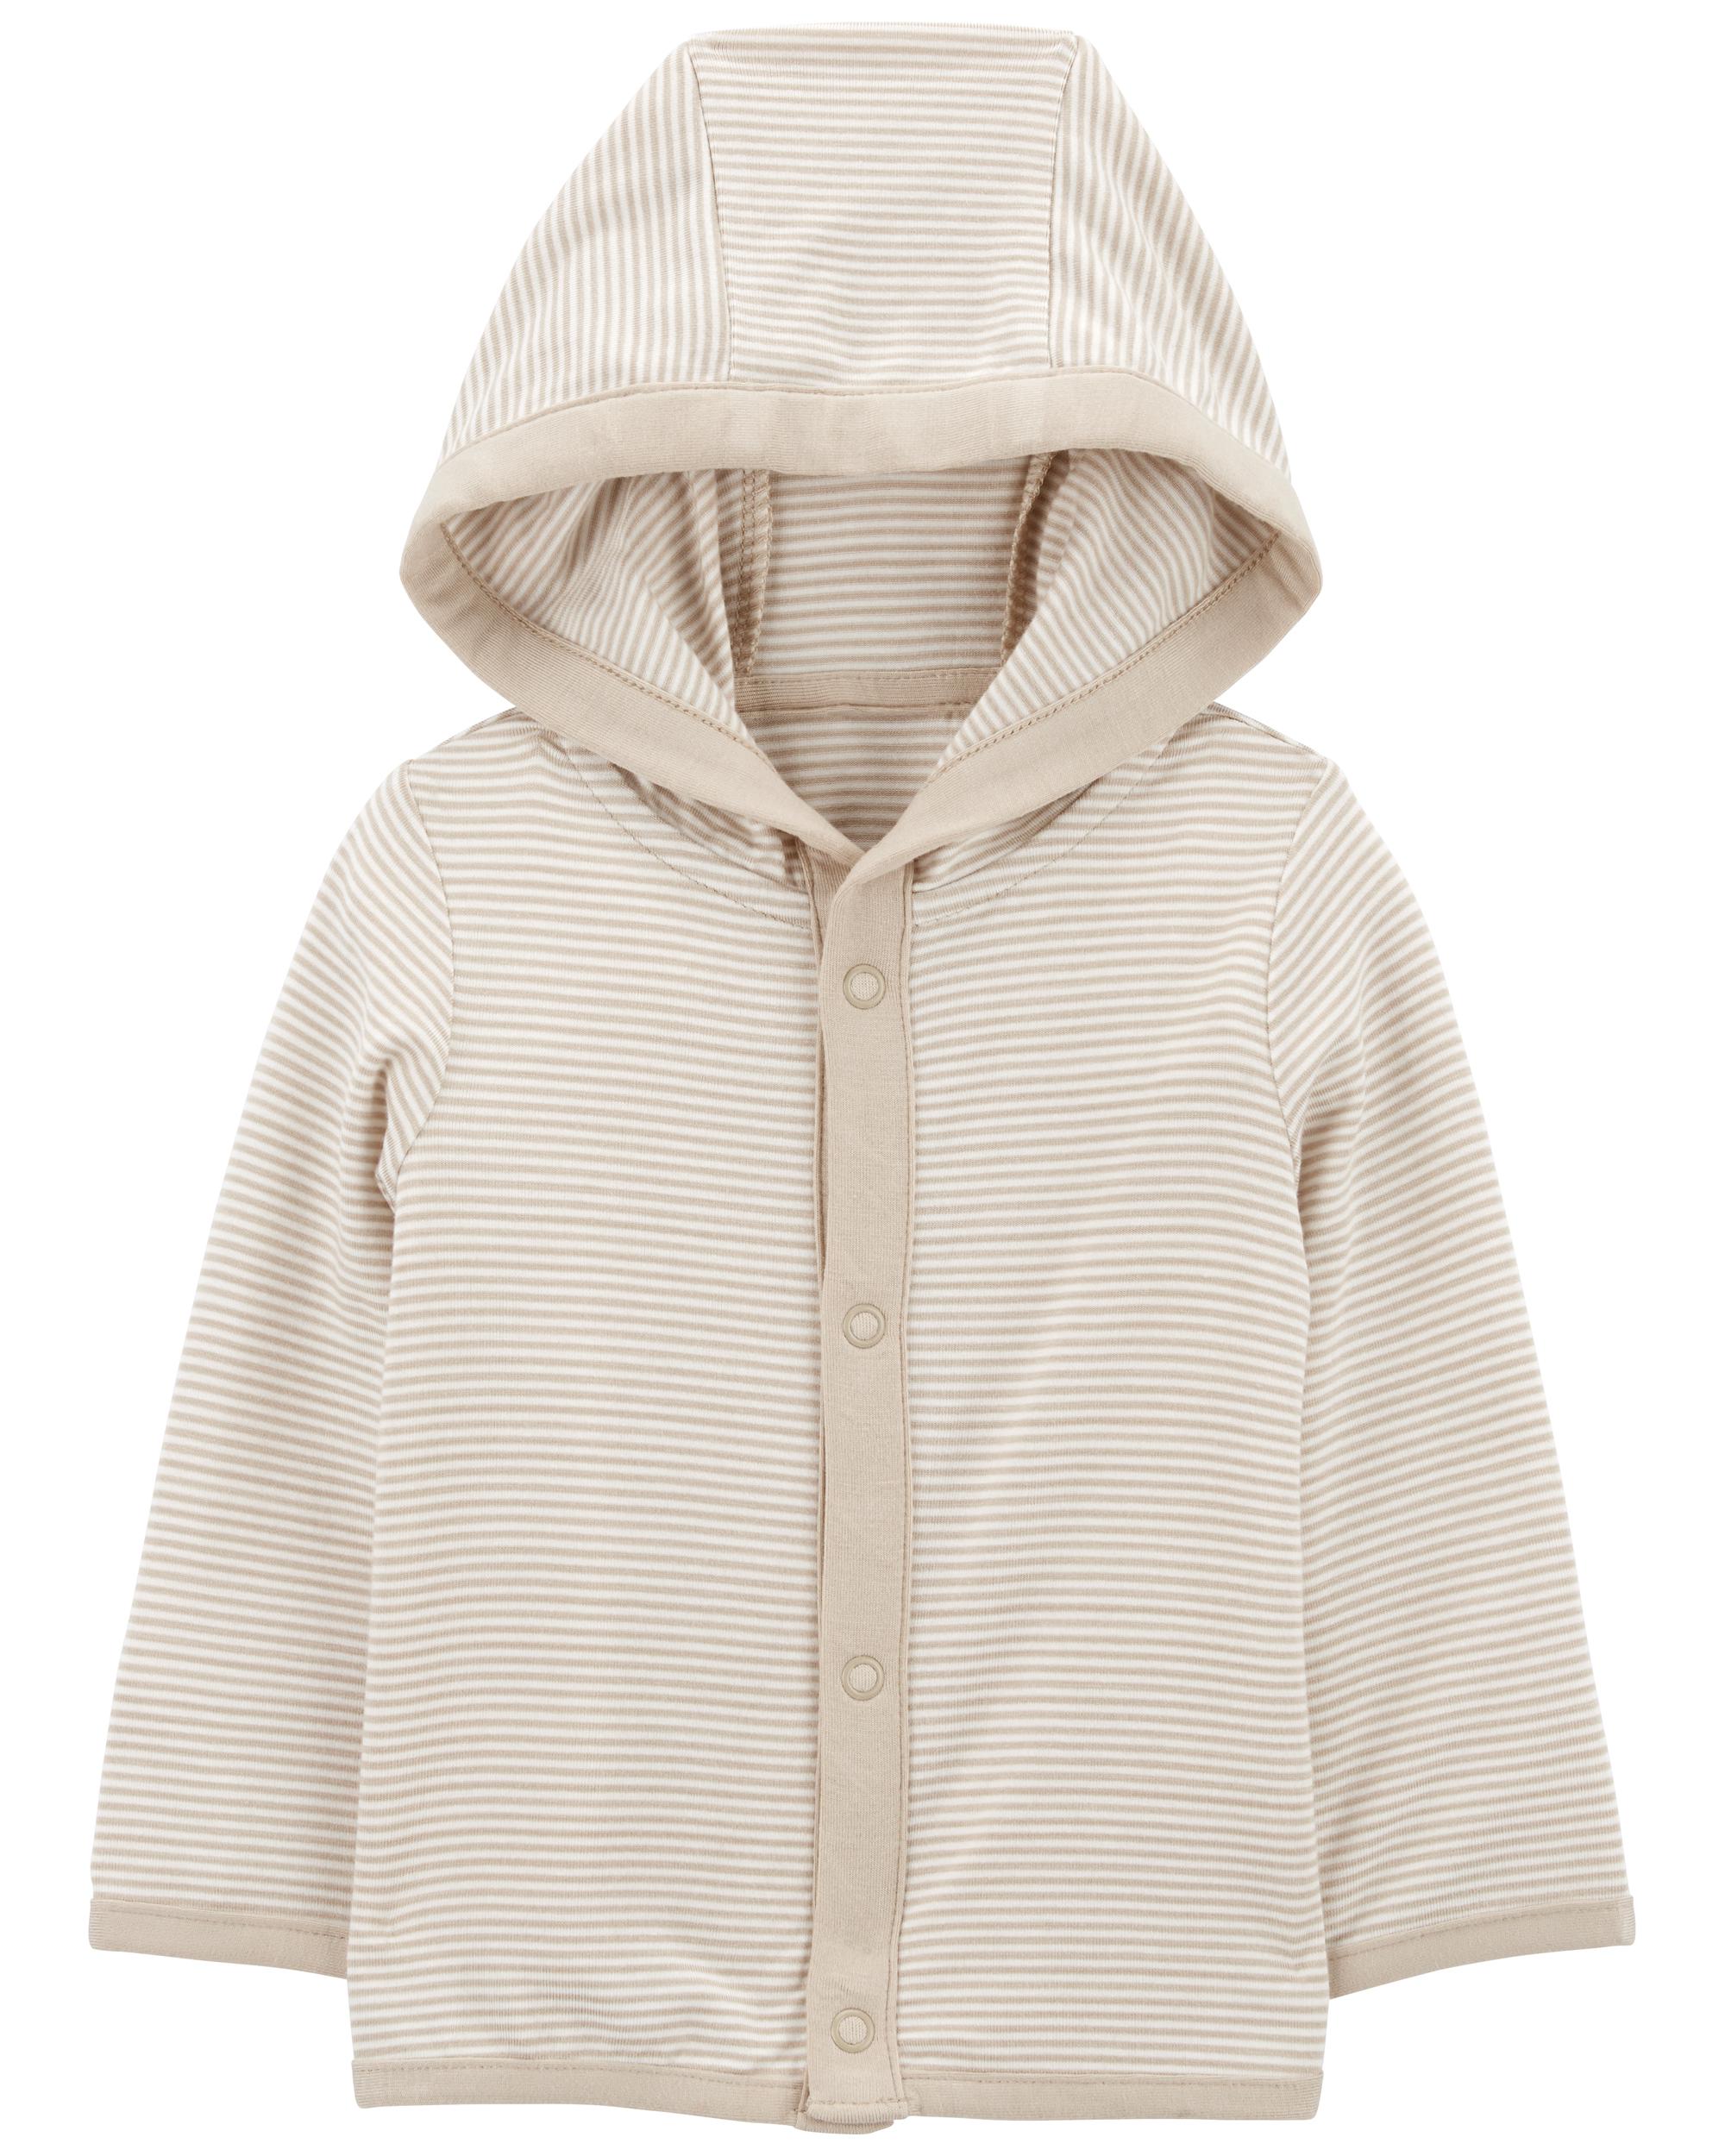 Baby Khaki & White PurelySoft Jersey Hooded Cardigan